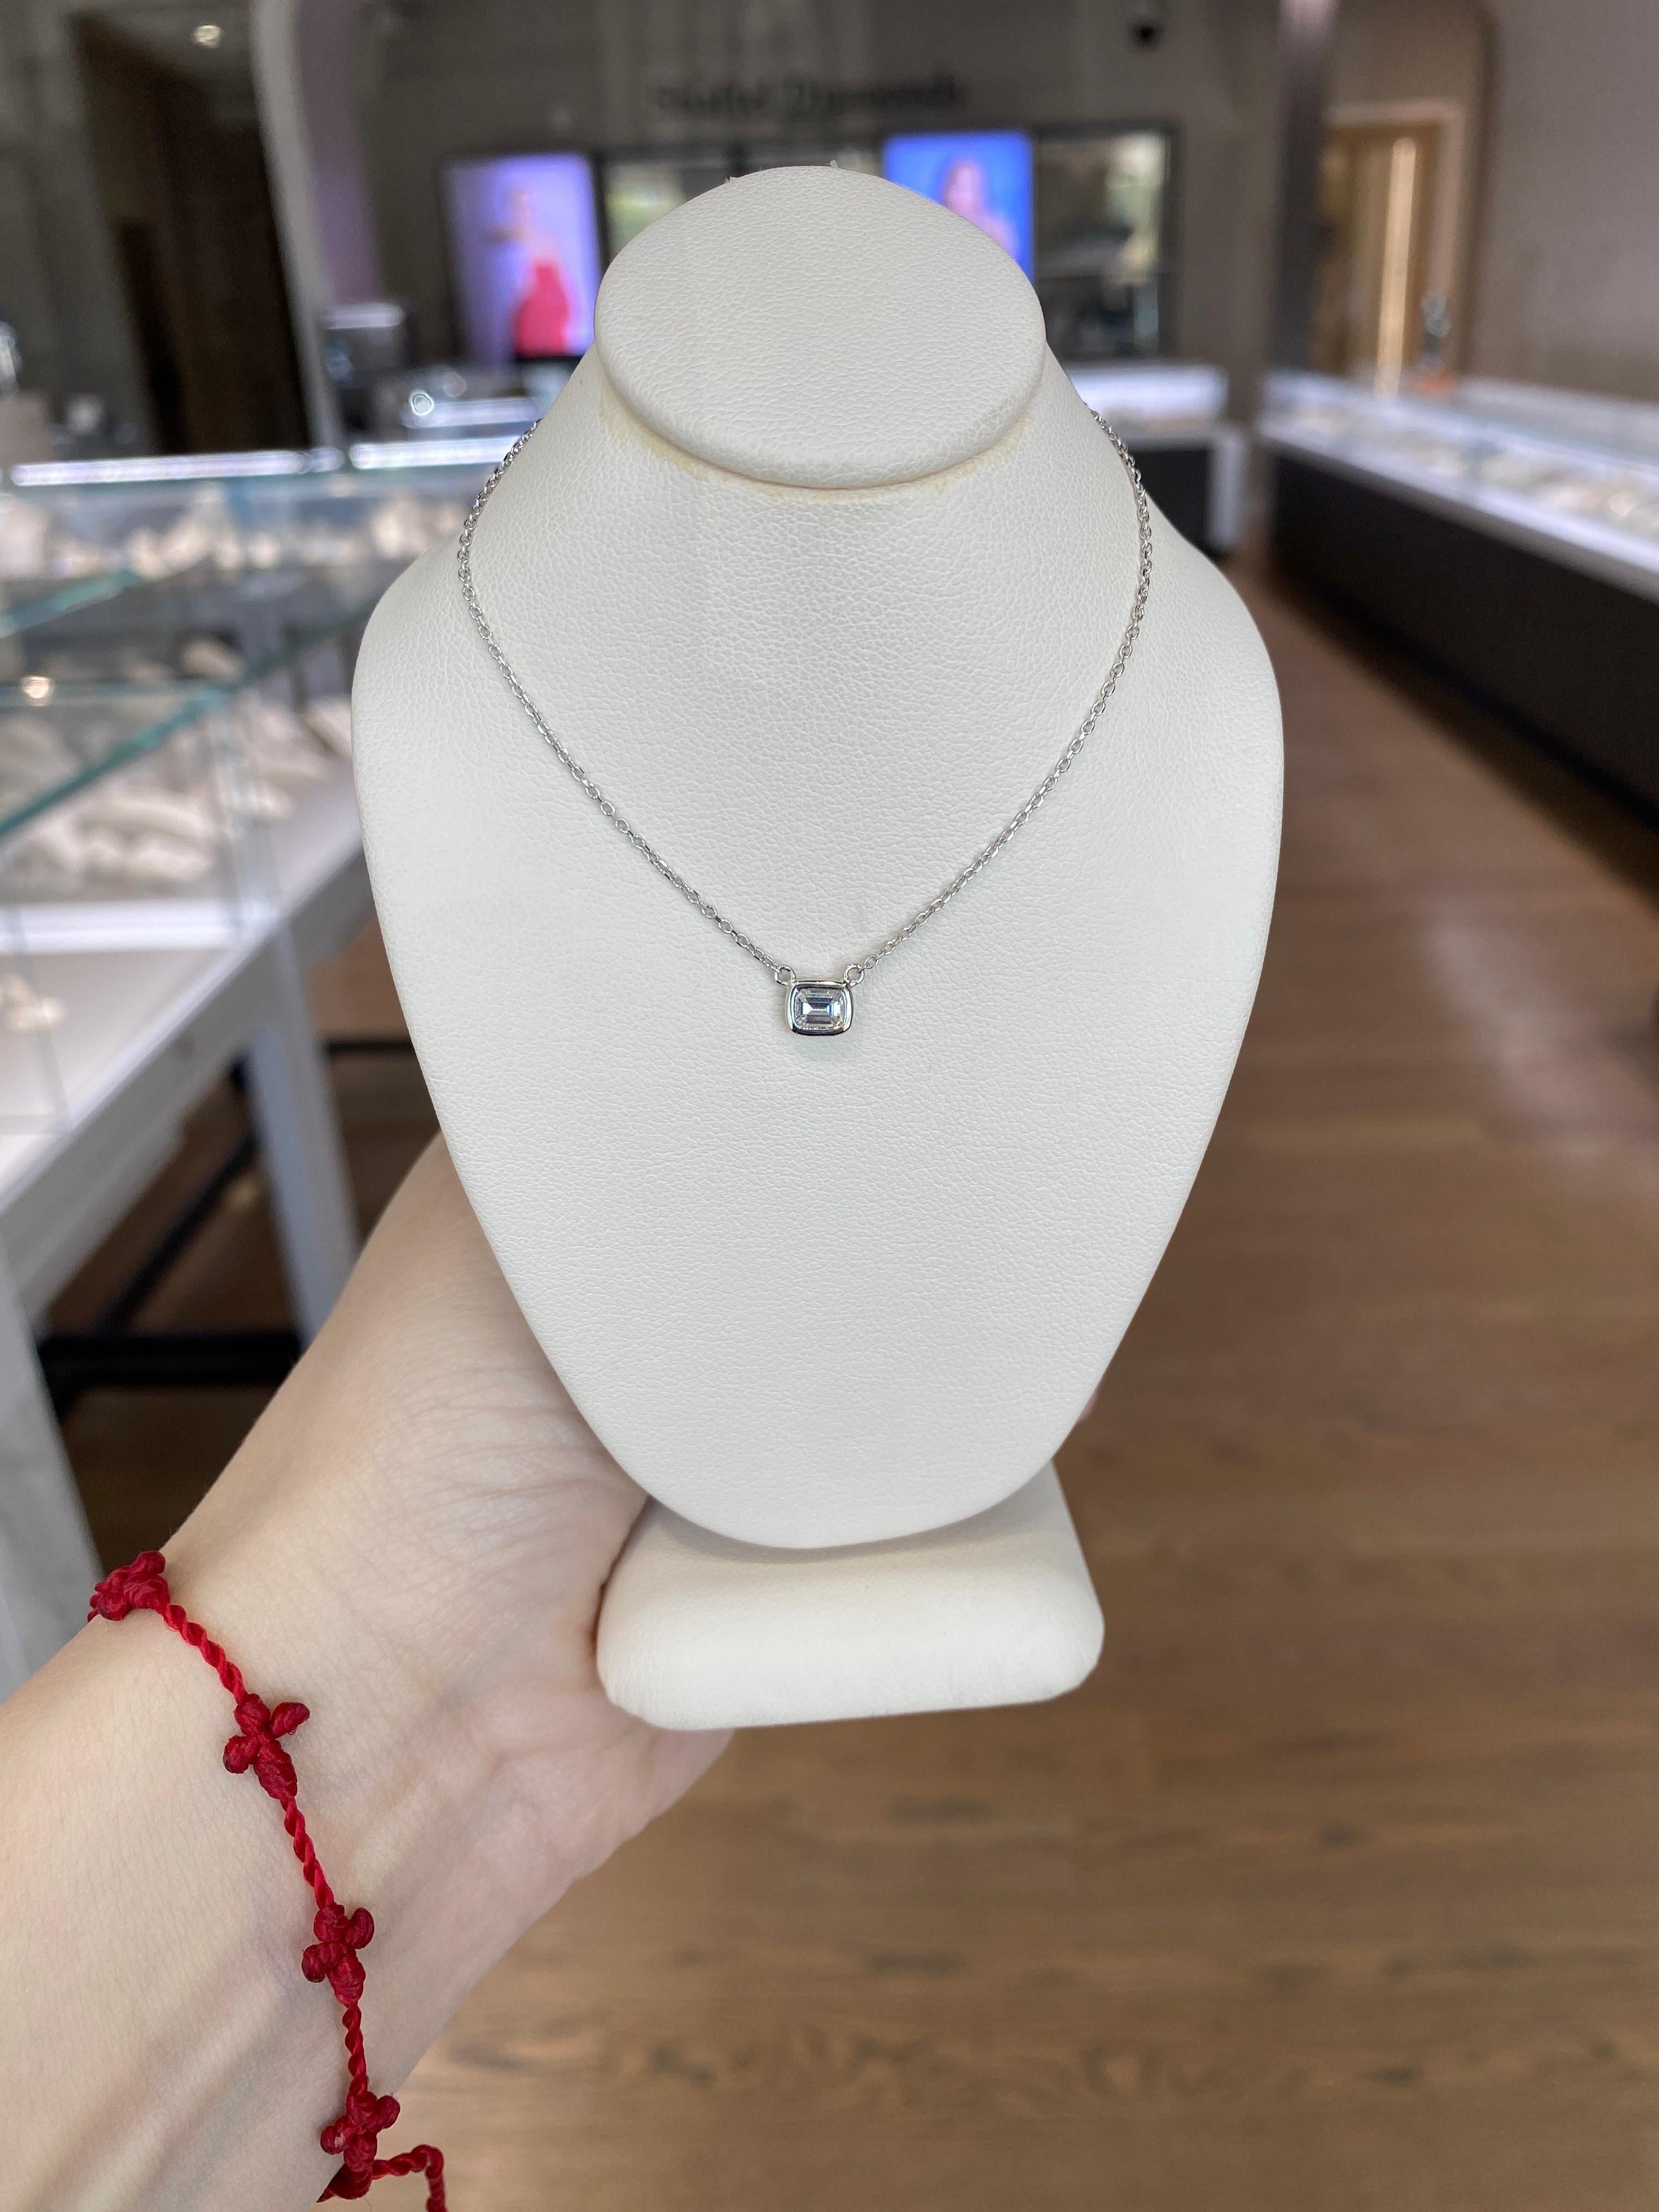 14k White Gold 0.23 Carat Natural Emerald Cut Diamond Pendant Necklace  For Sale 8